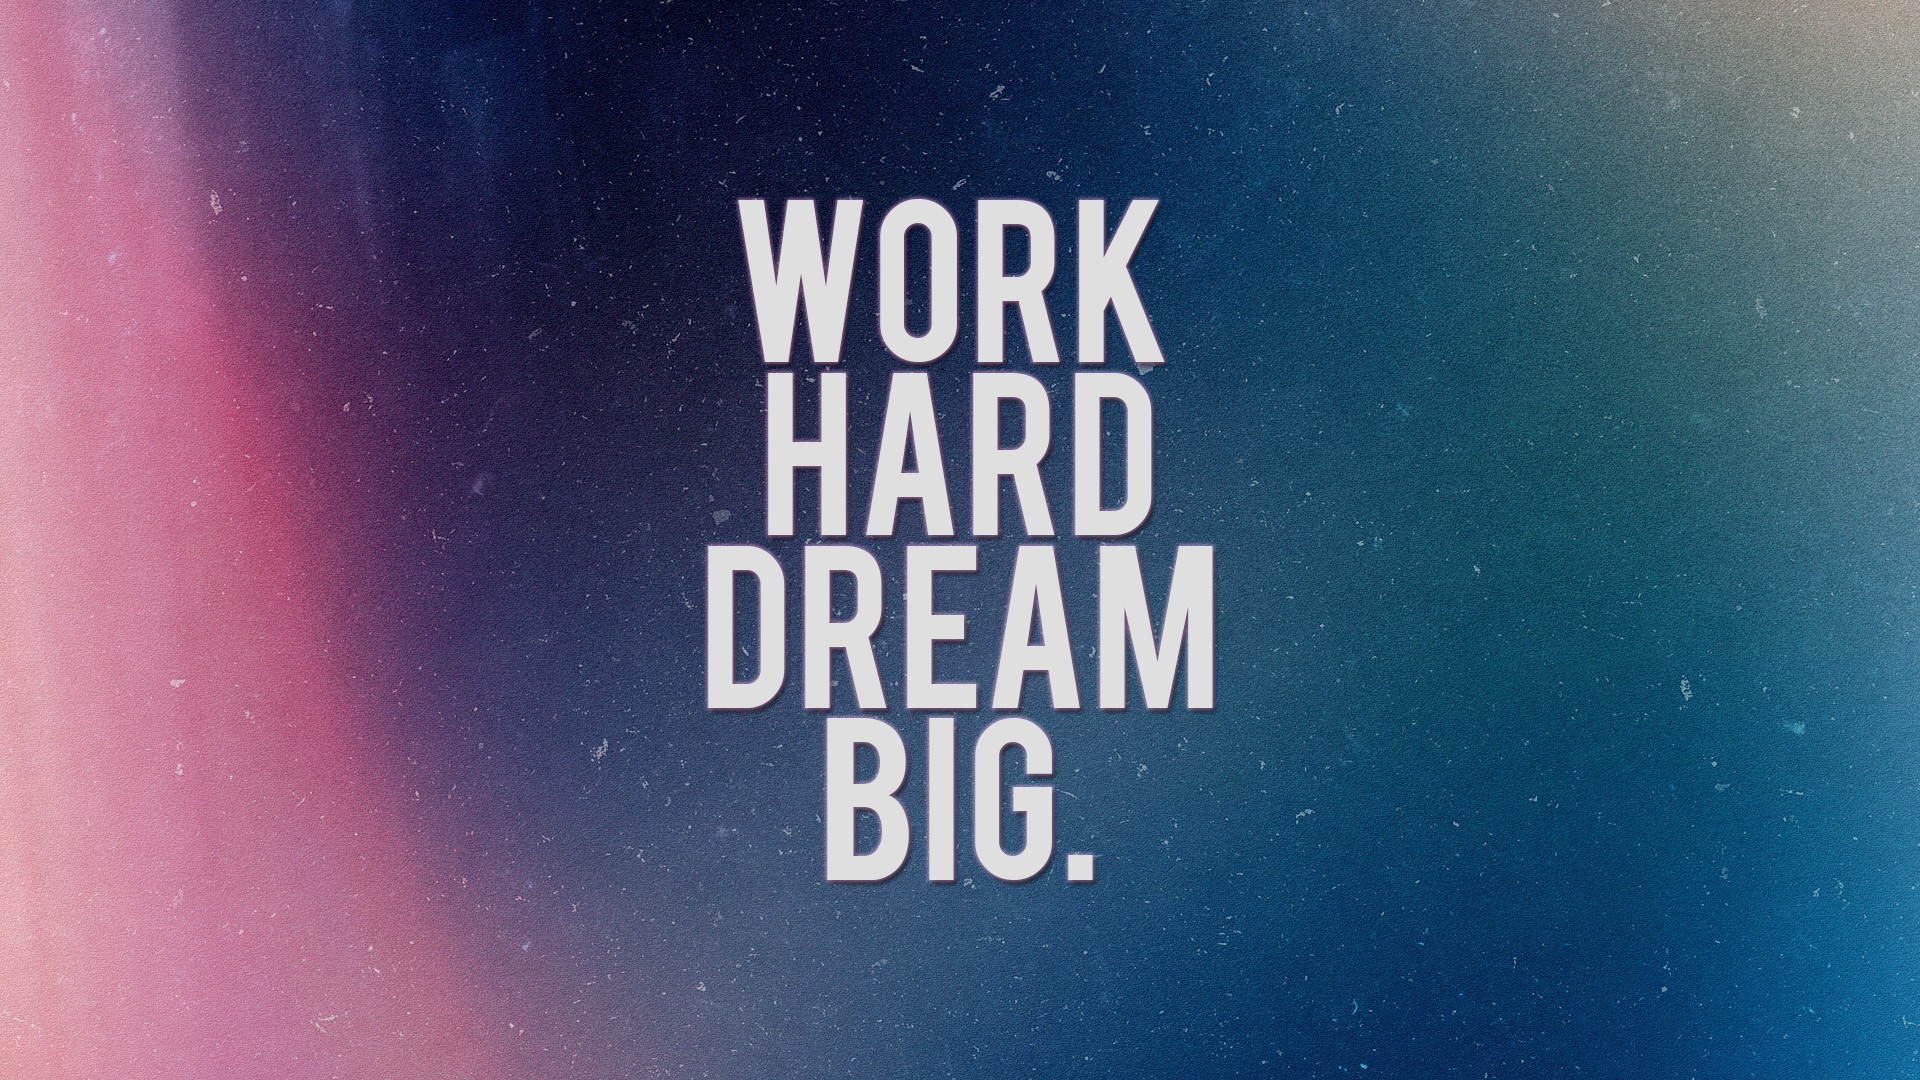 work-hard-dream-big-quote-hd-wallpaper-1920x1080-2618